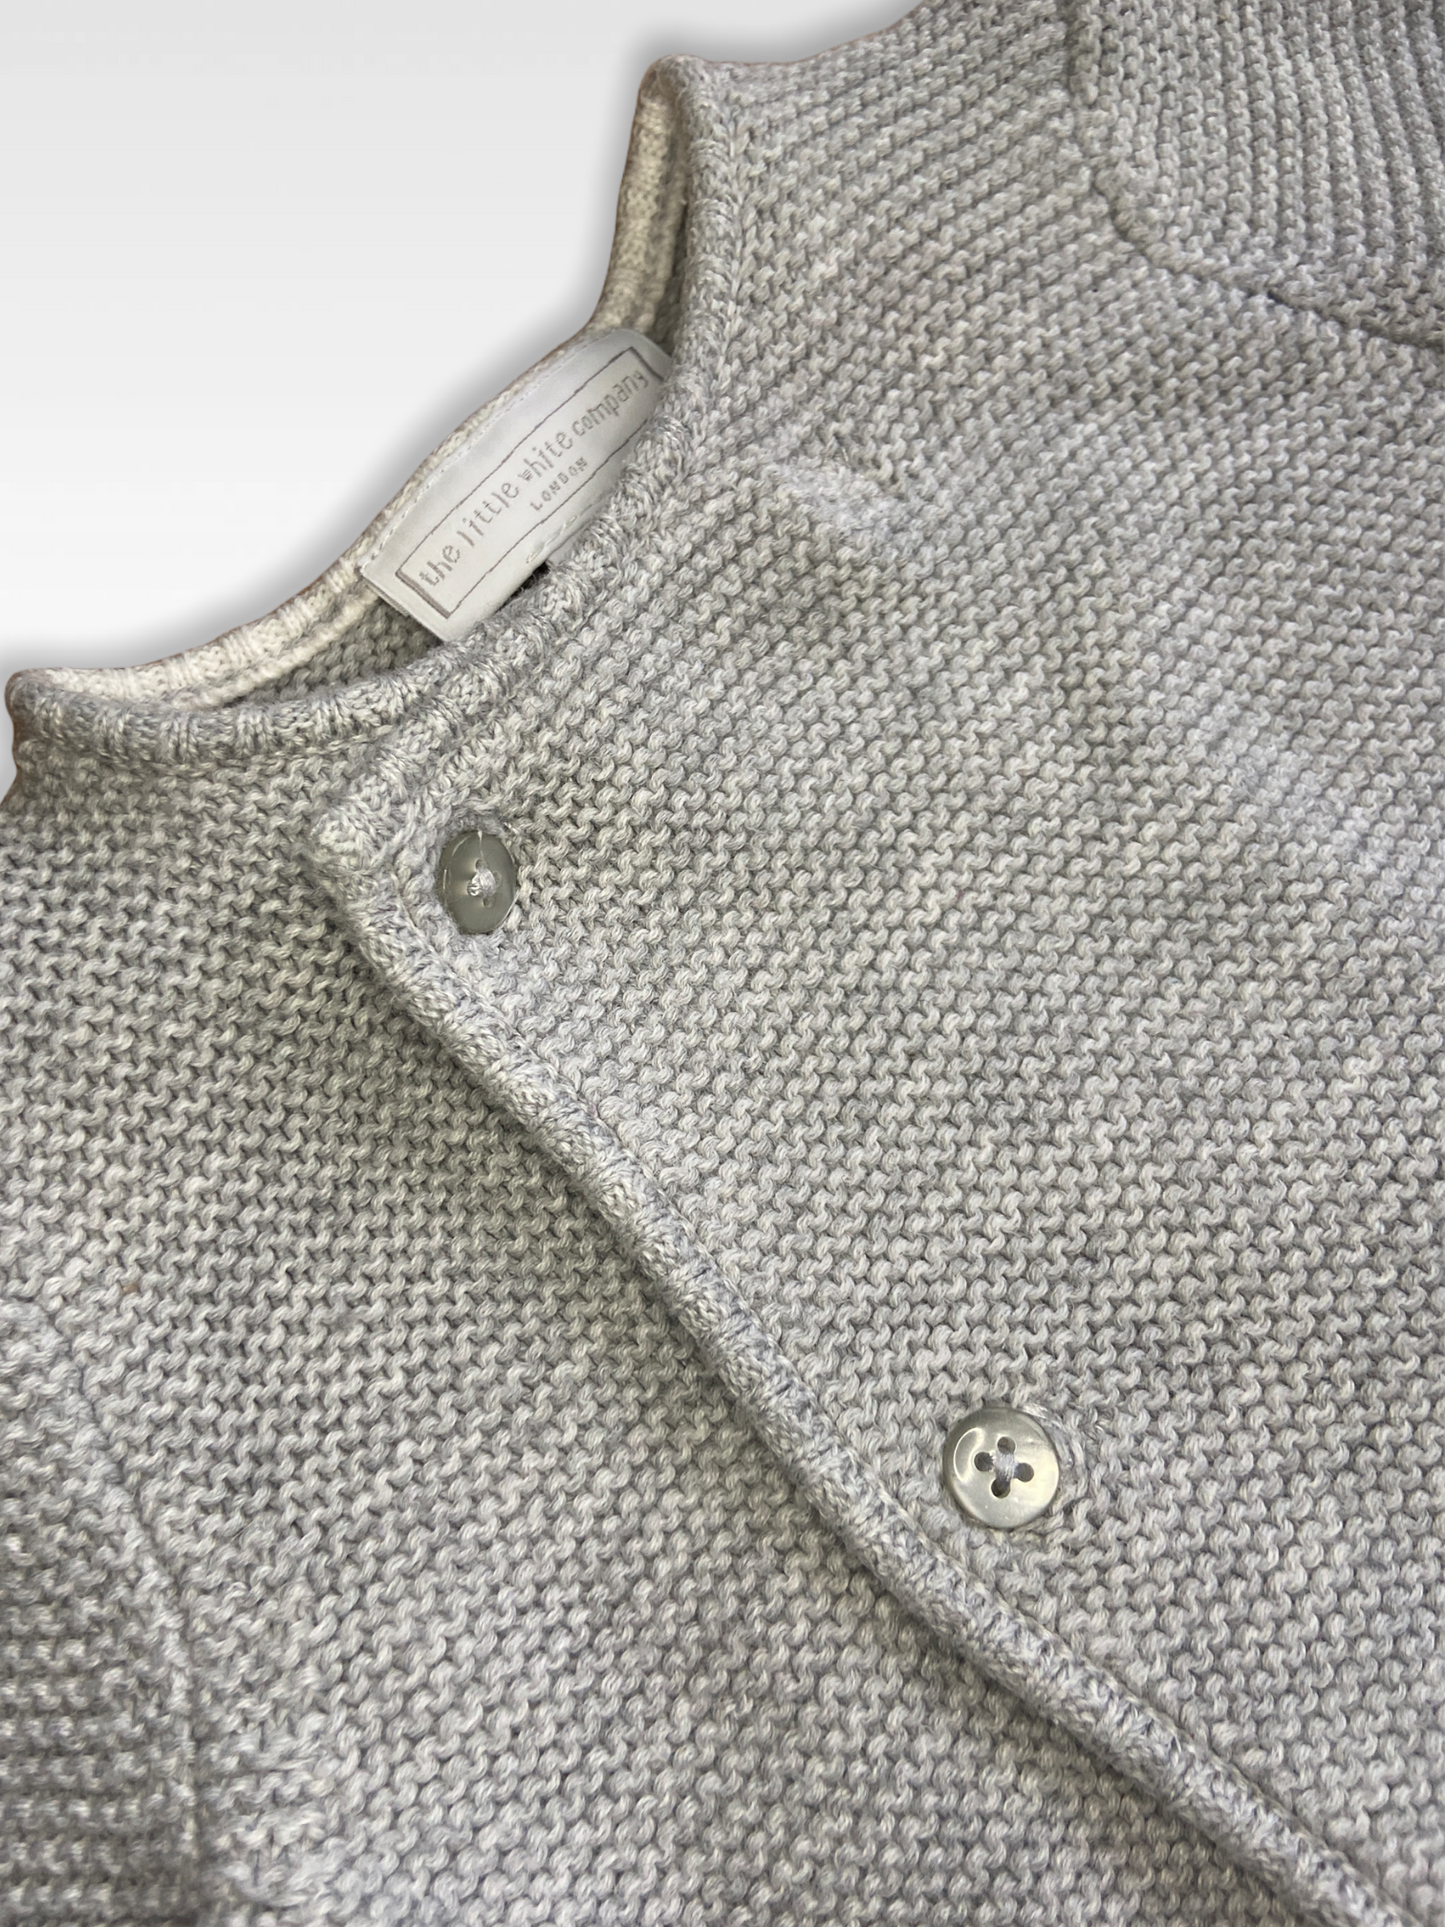 0-1 M Grey knitted cardigan